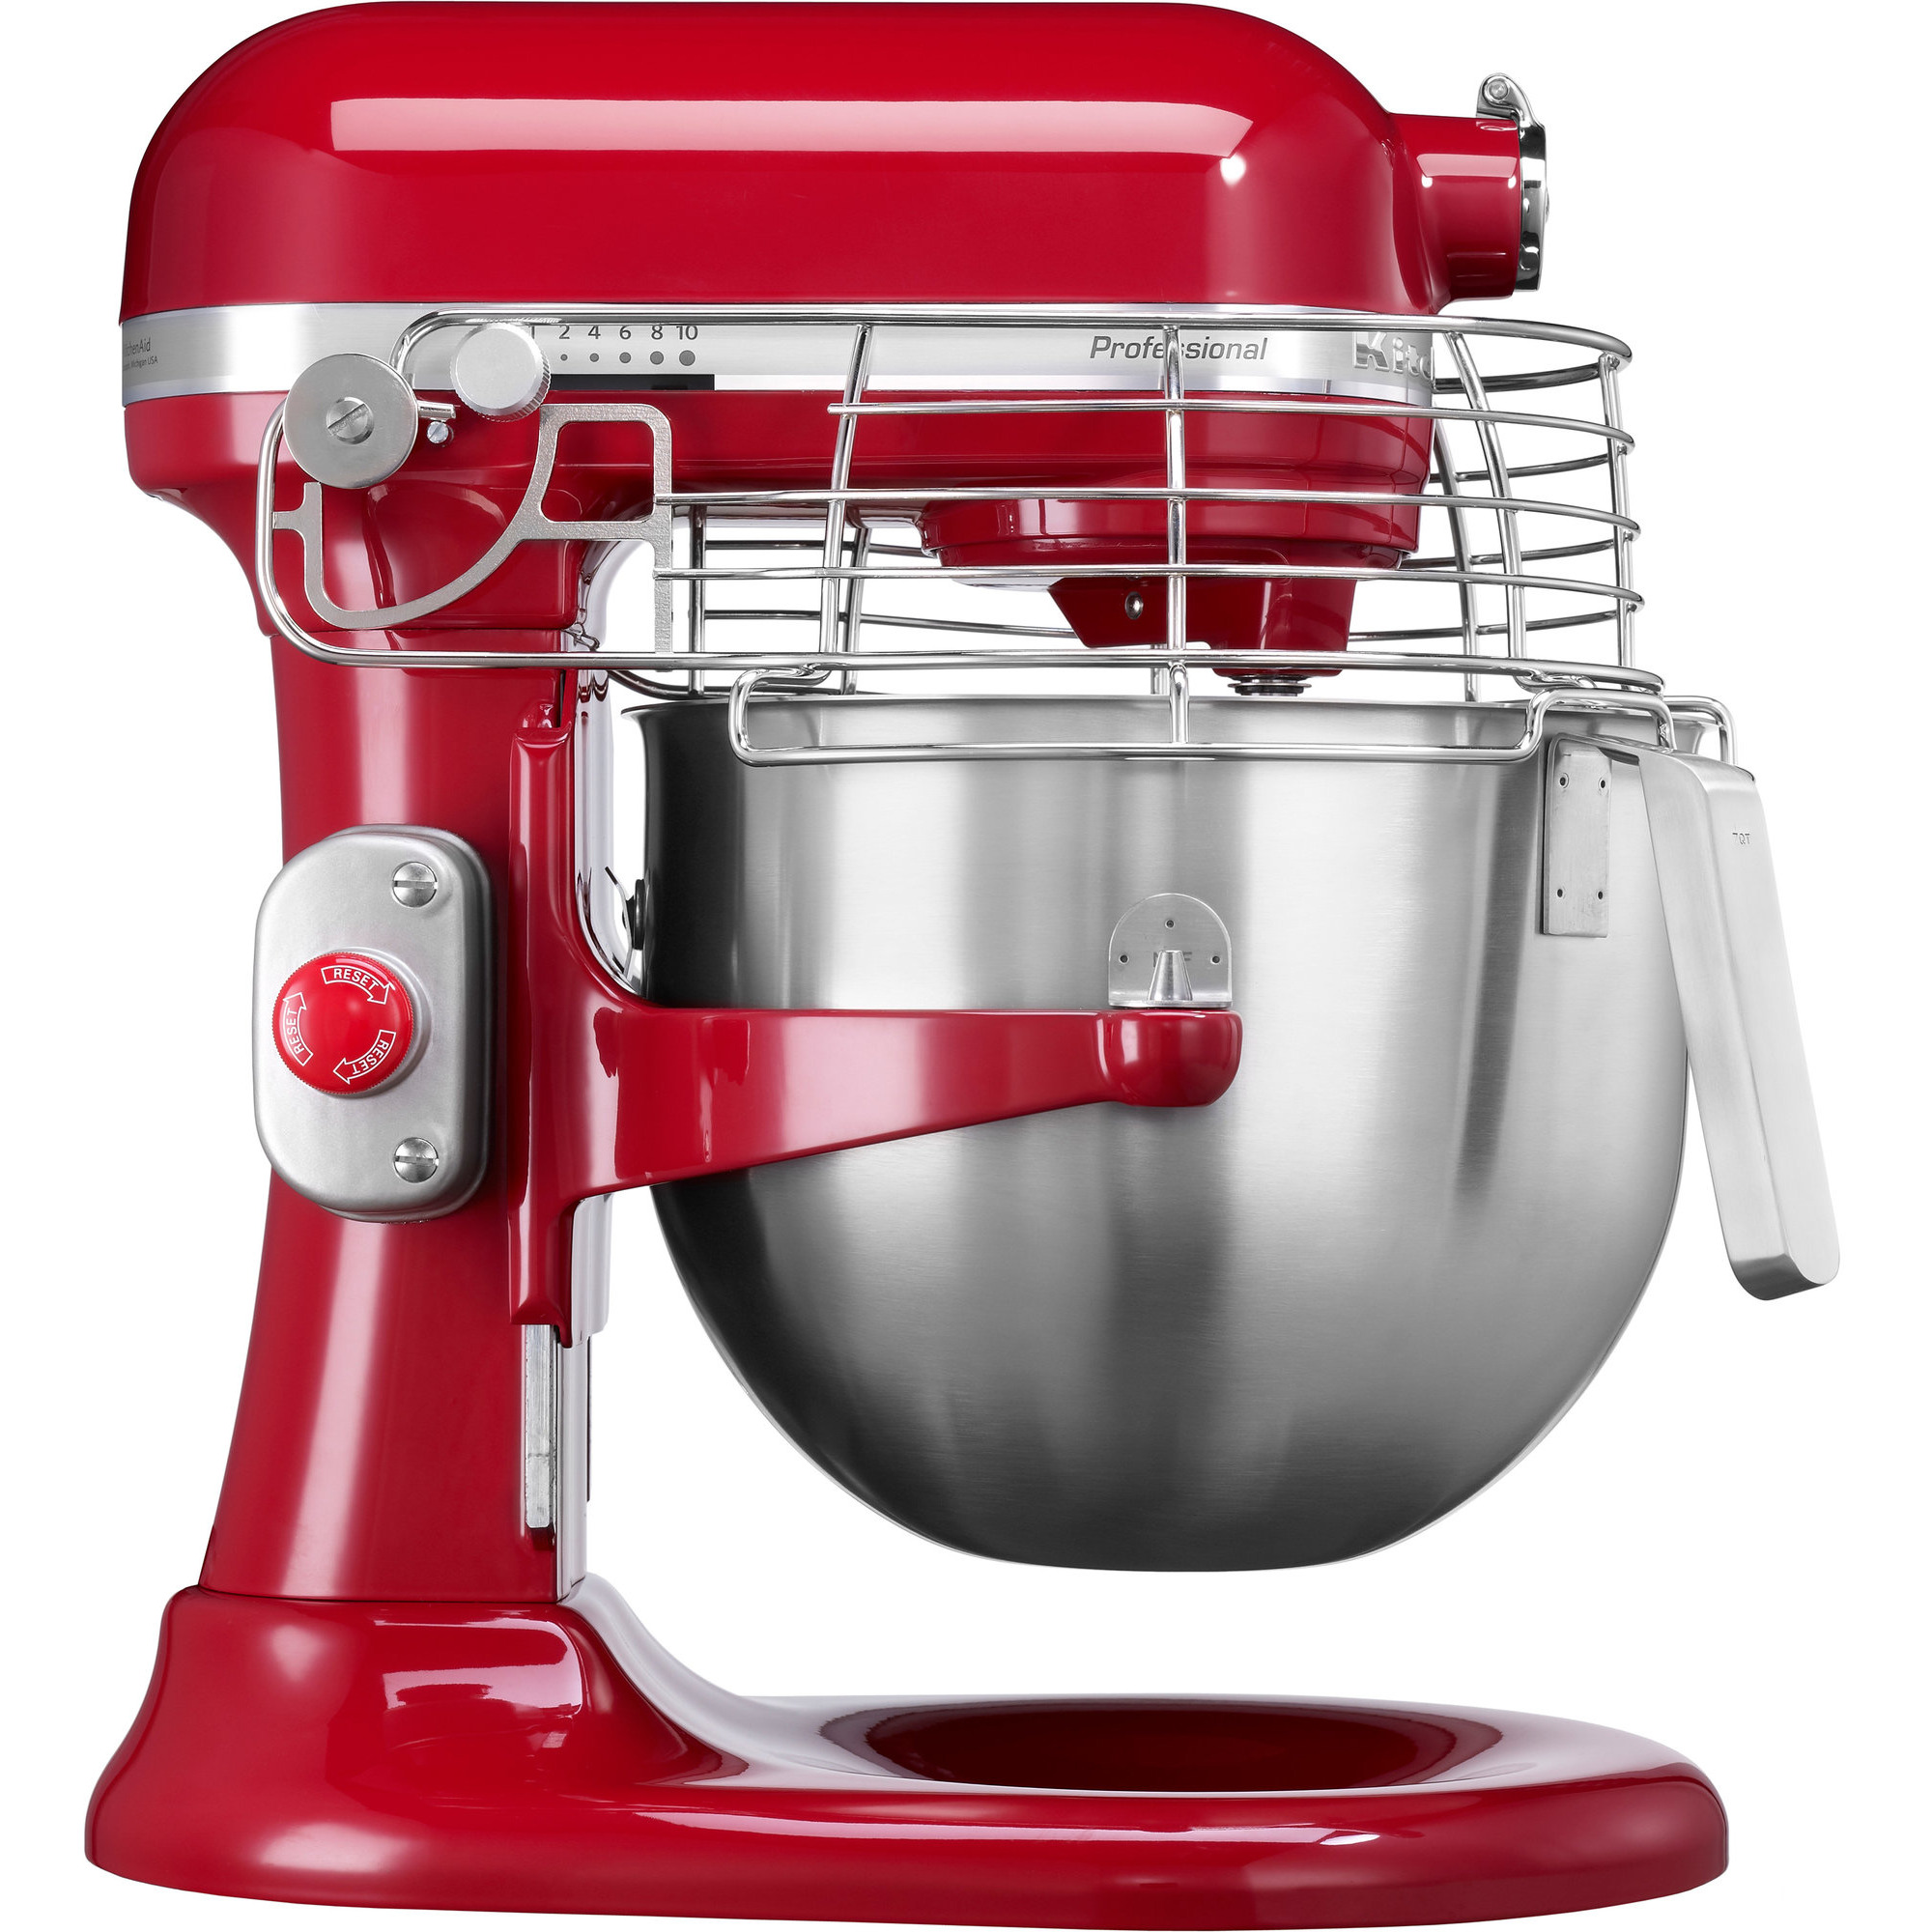 7: KitchenAid Professionel køkkenmaskine rød